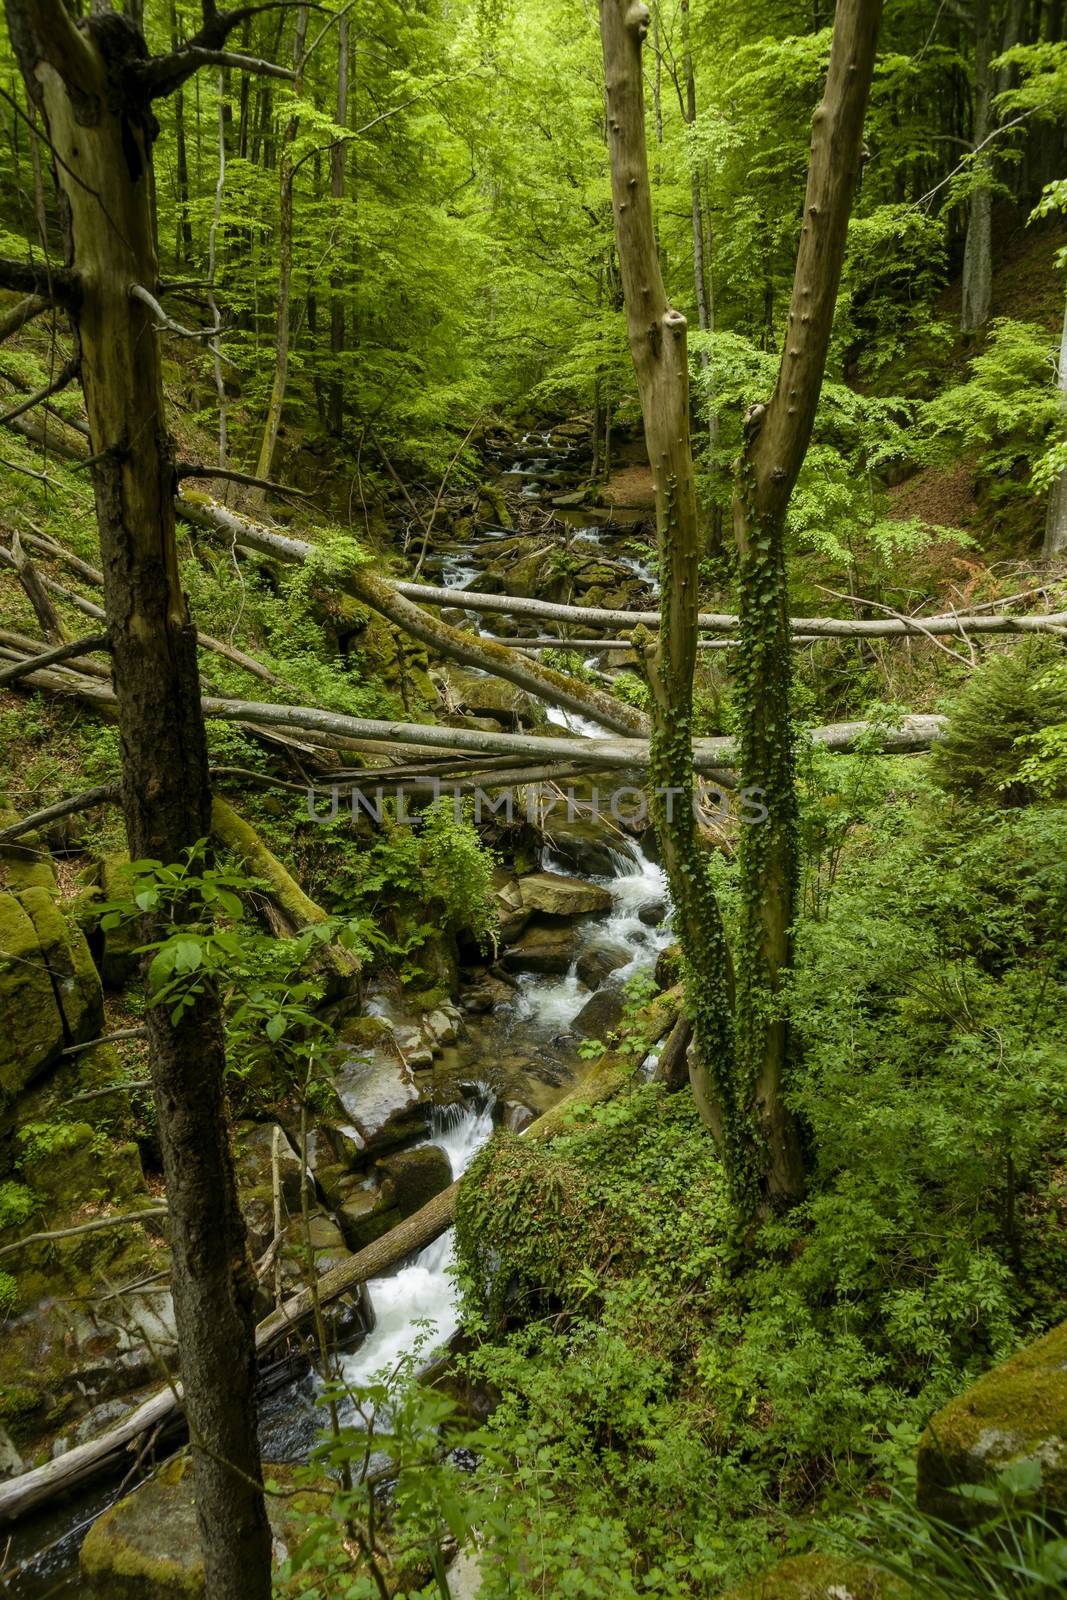 Mountain stream, river flowing through dense forest. Bistriski V by asafaric